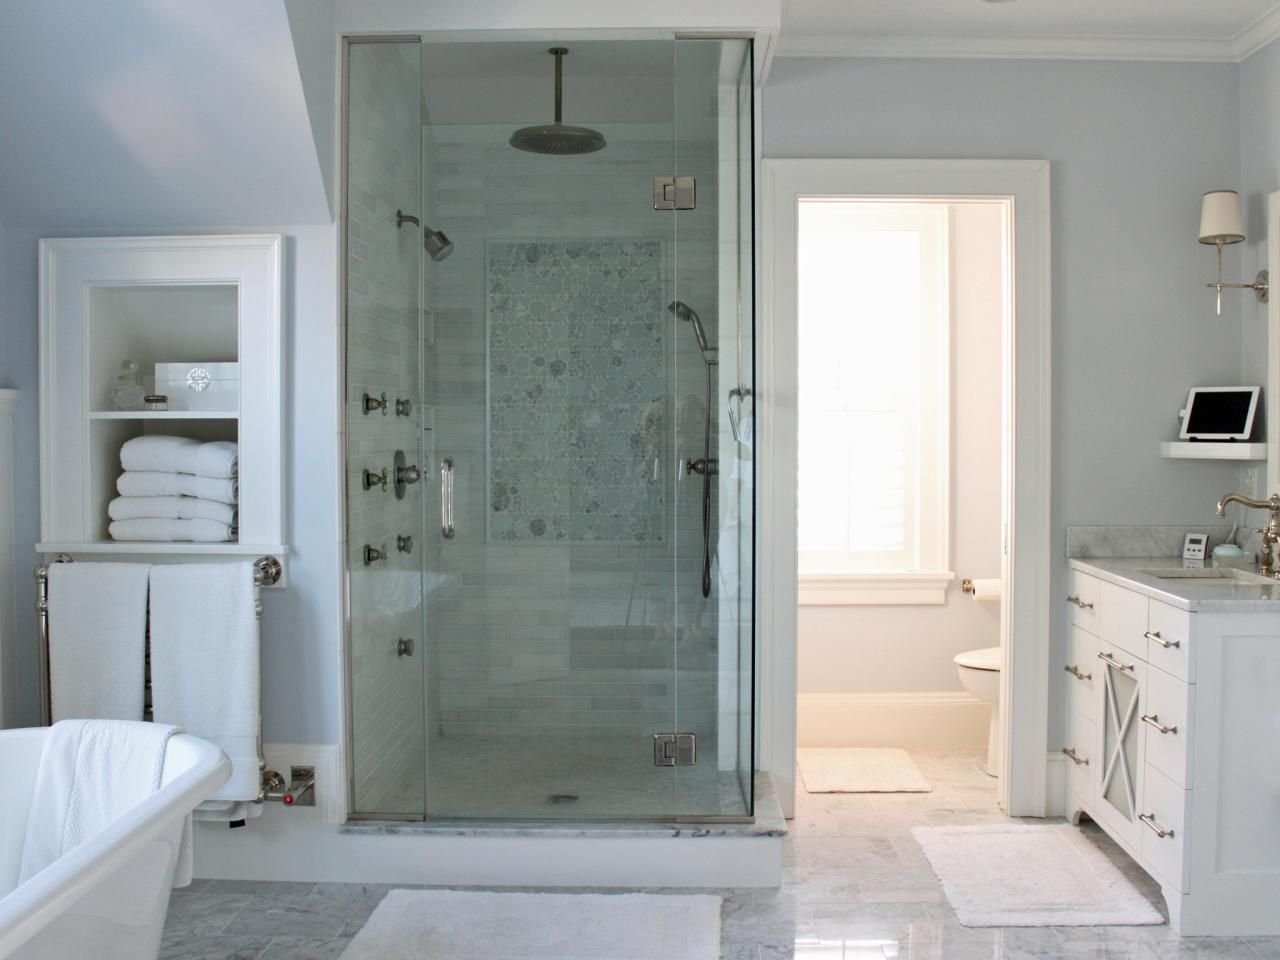 White shower. Ванная комната с душем и ванной. Душевая кабина с окном. Ванная с окном и душевой. Ванная и душевая в одной комнате.